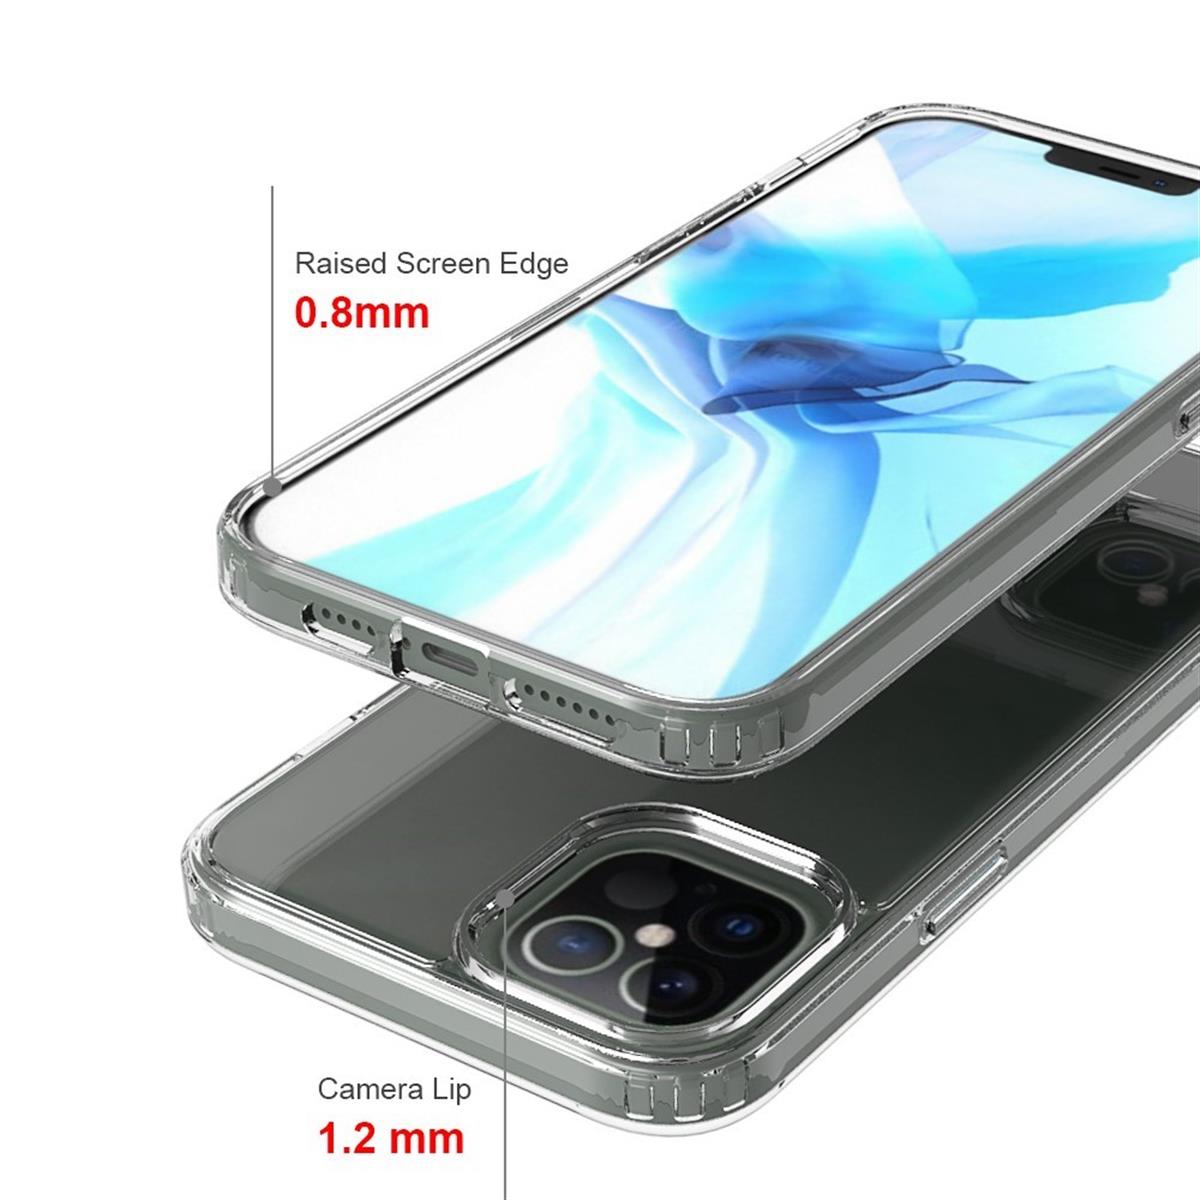 Hülle für Apple iPhone 12 Pro Max Handyhülle Hybrid Case Schutzhülle Cover Klar